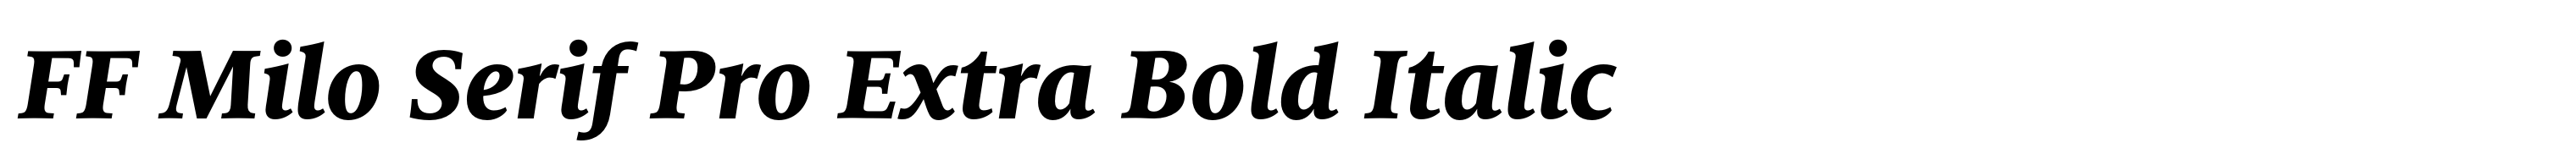 FF Milo Serif Pro Extra Bold Italic